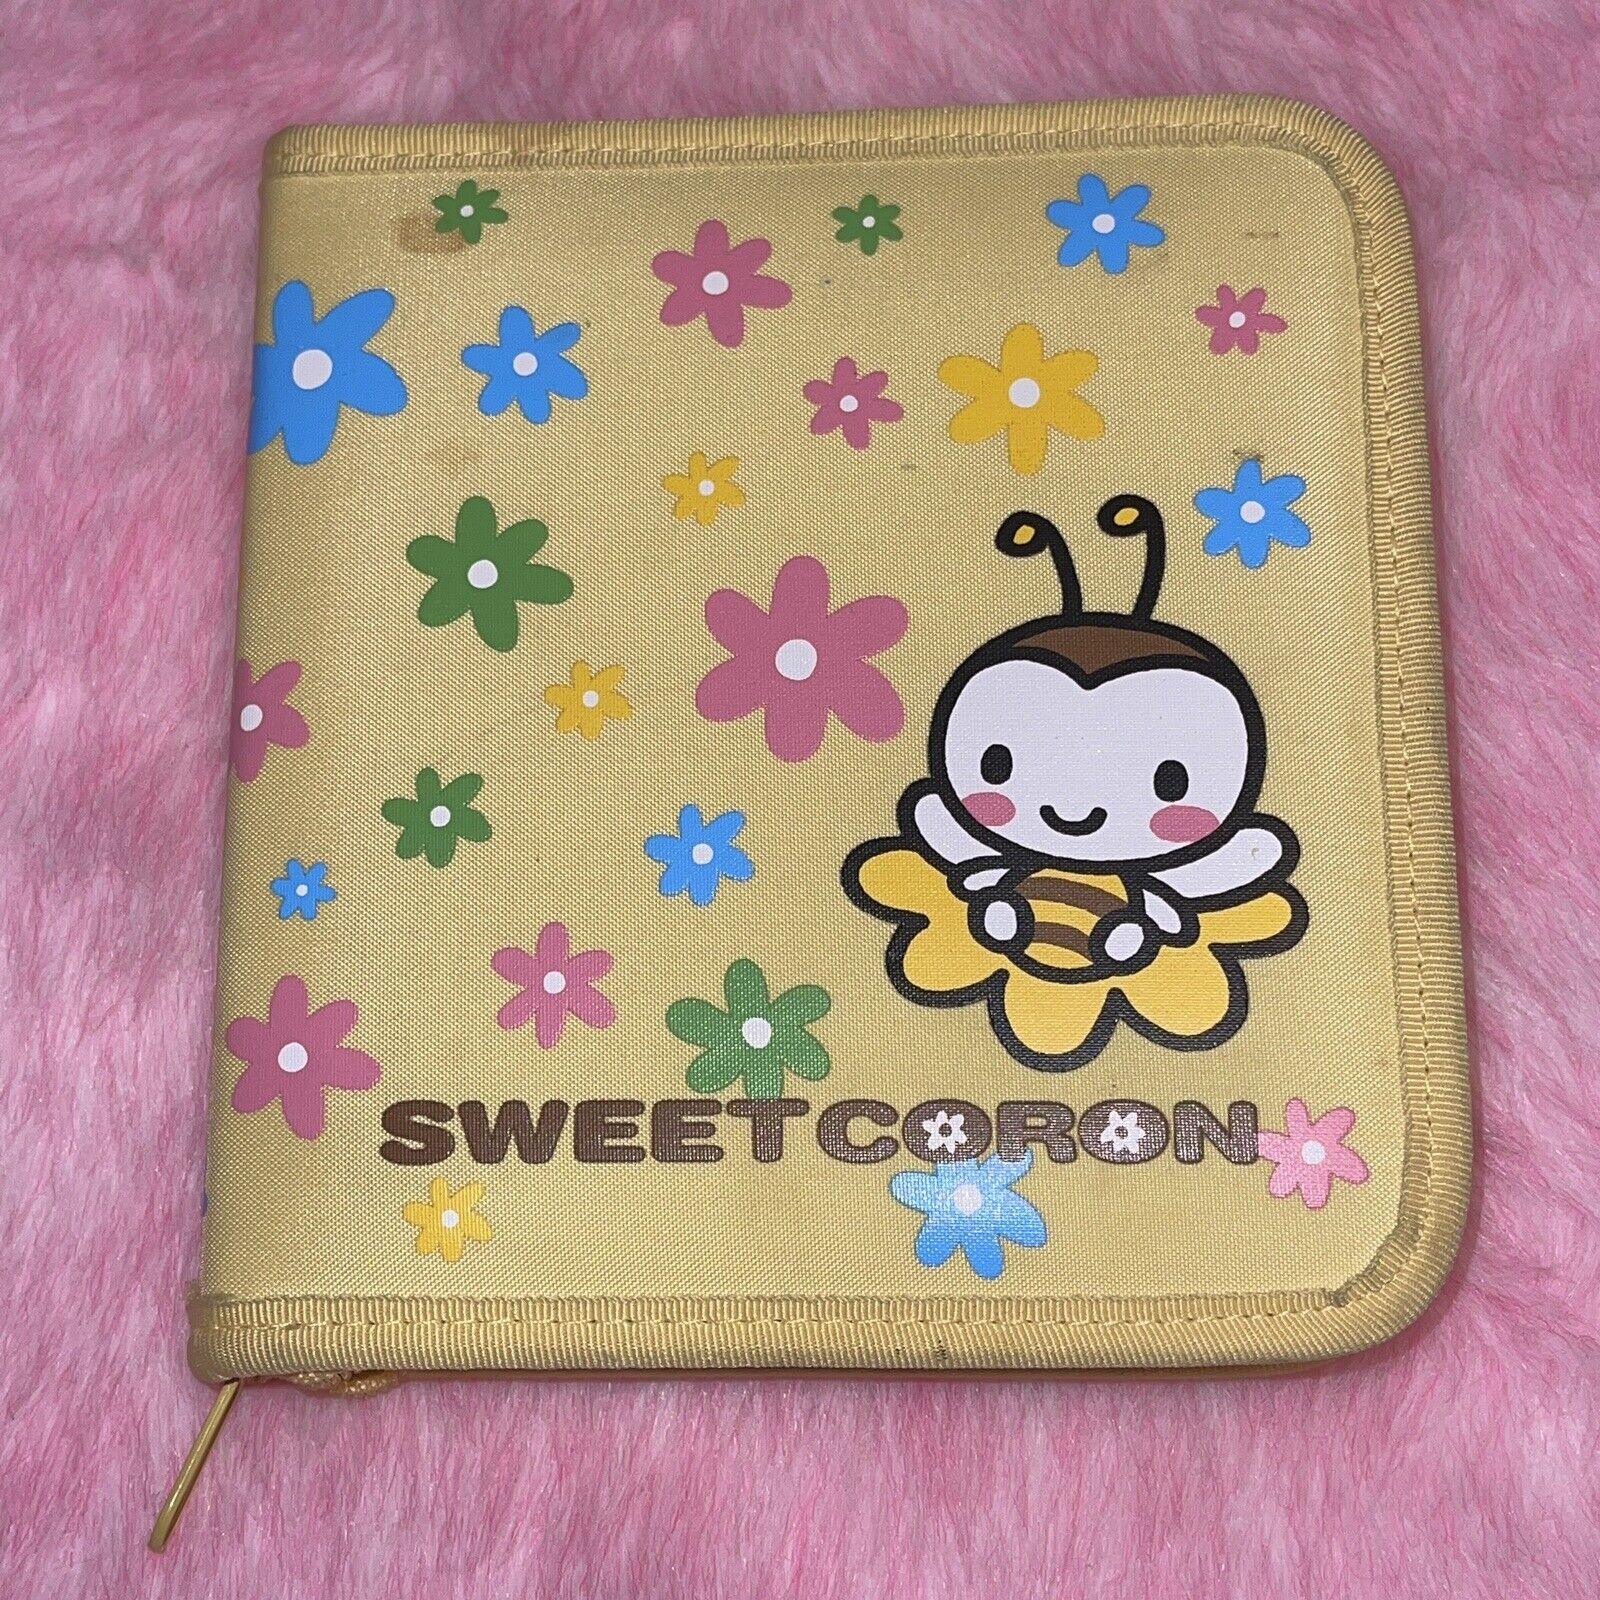 Vintage y2k 2001 hello kitty Sanrio sweet coron cd disk case sweetcoron bee